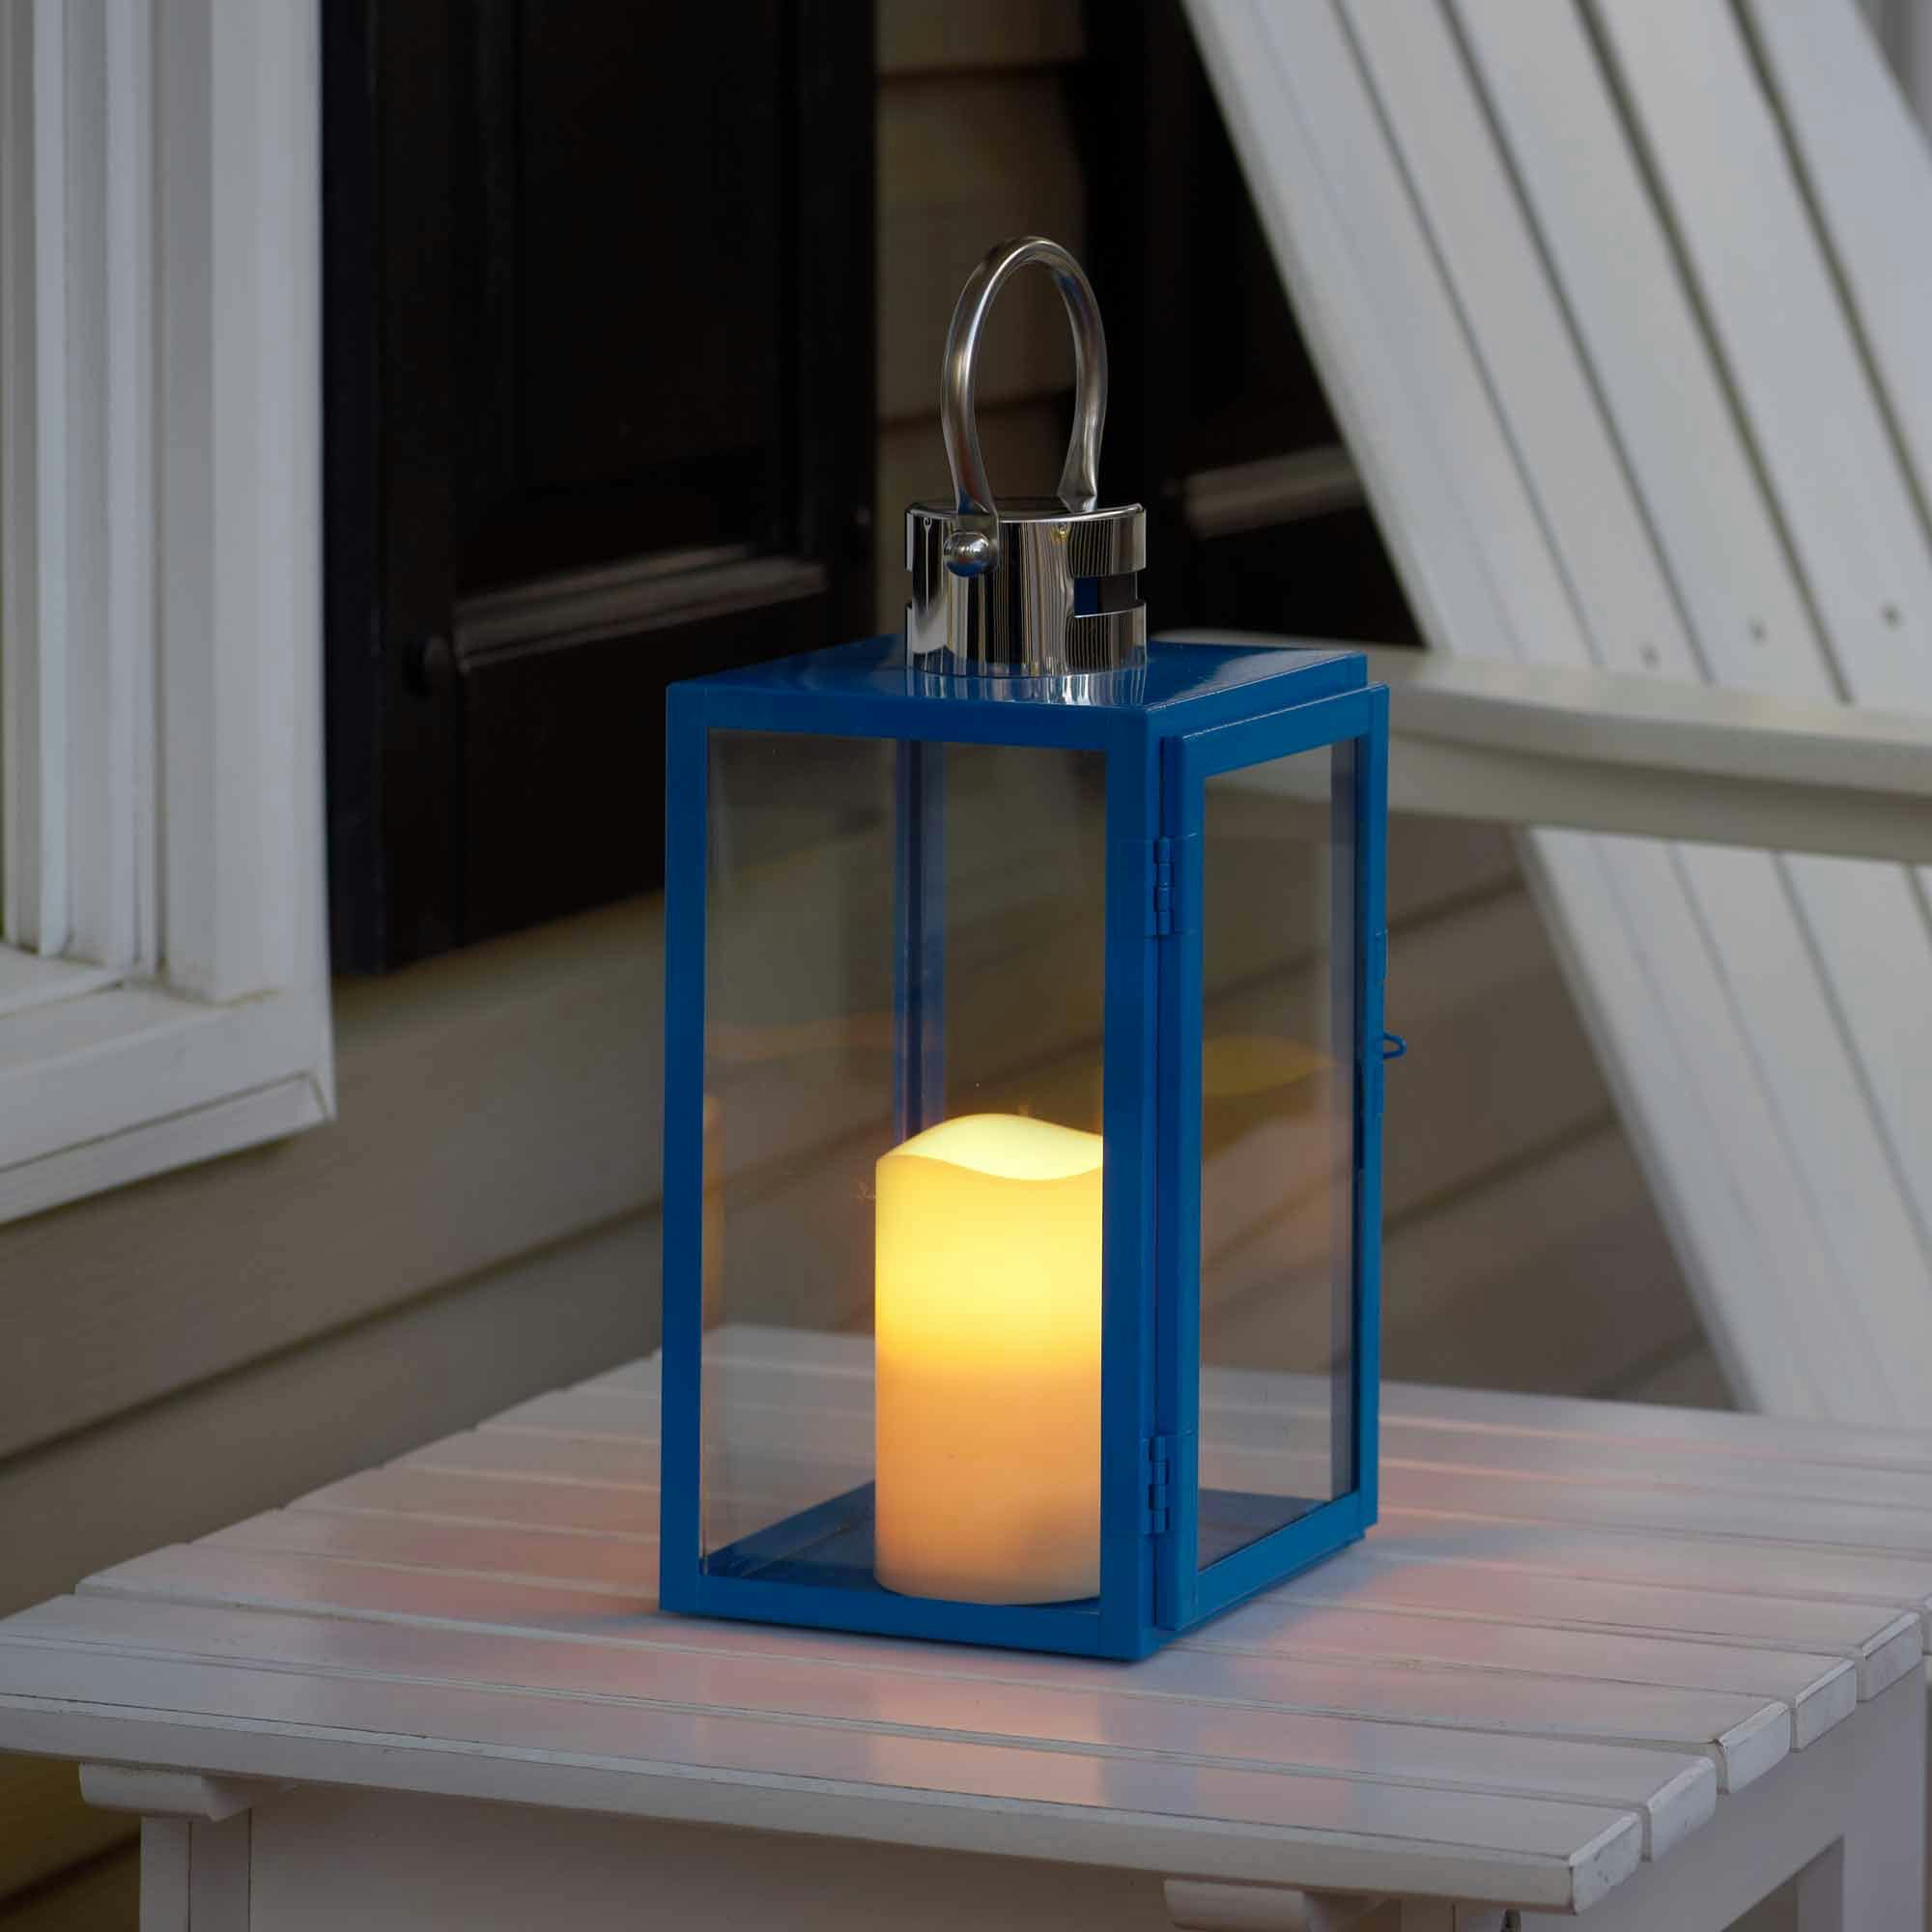 Winter Nights 11" Vibrant Blue Stainless Steel LED Lantern